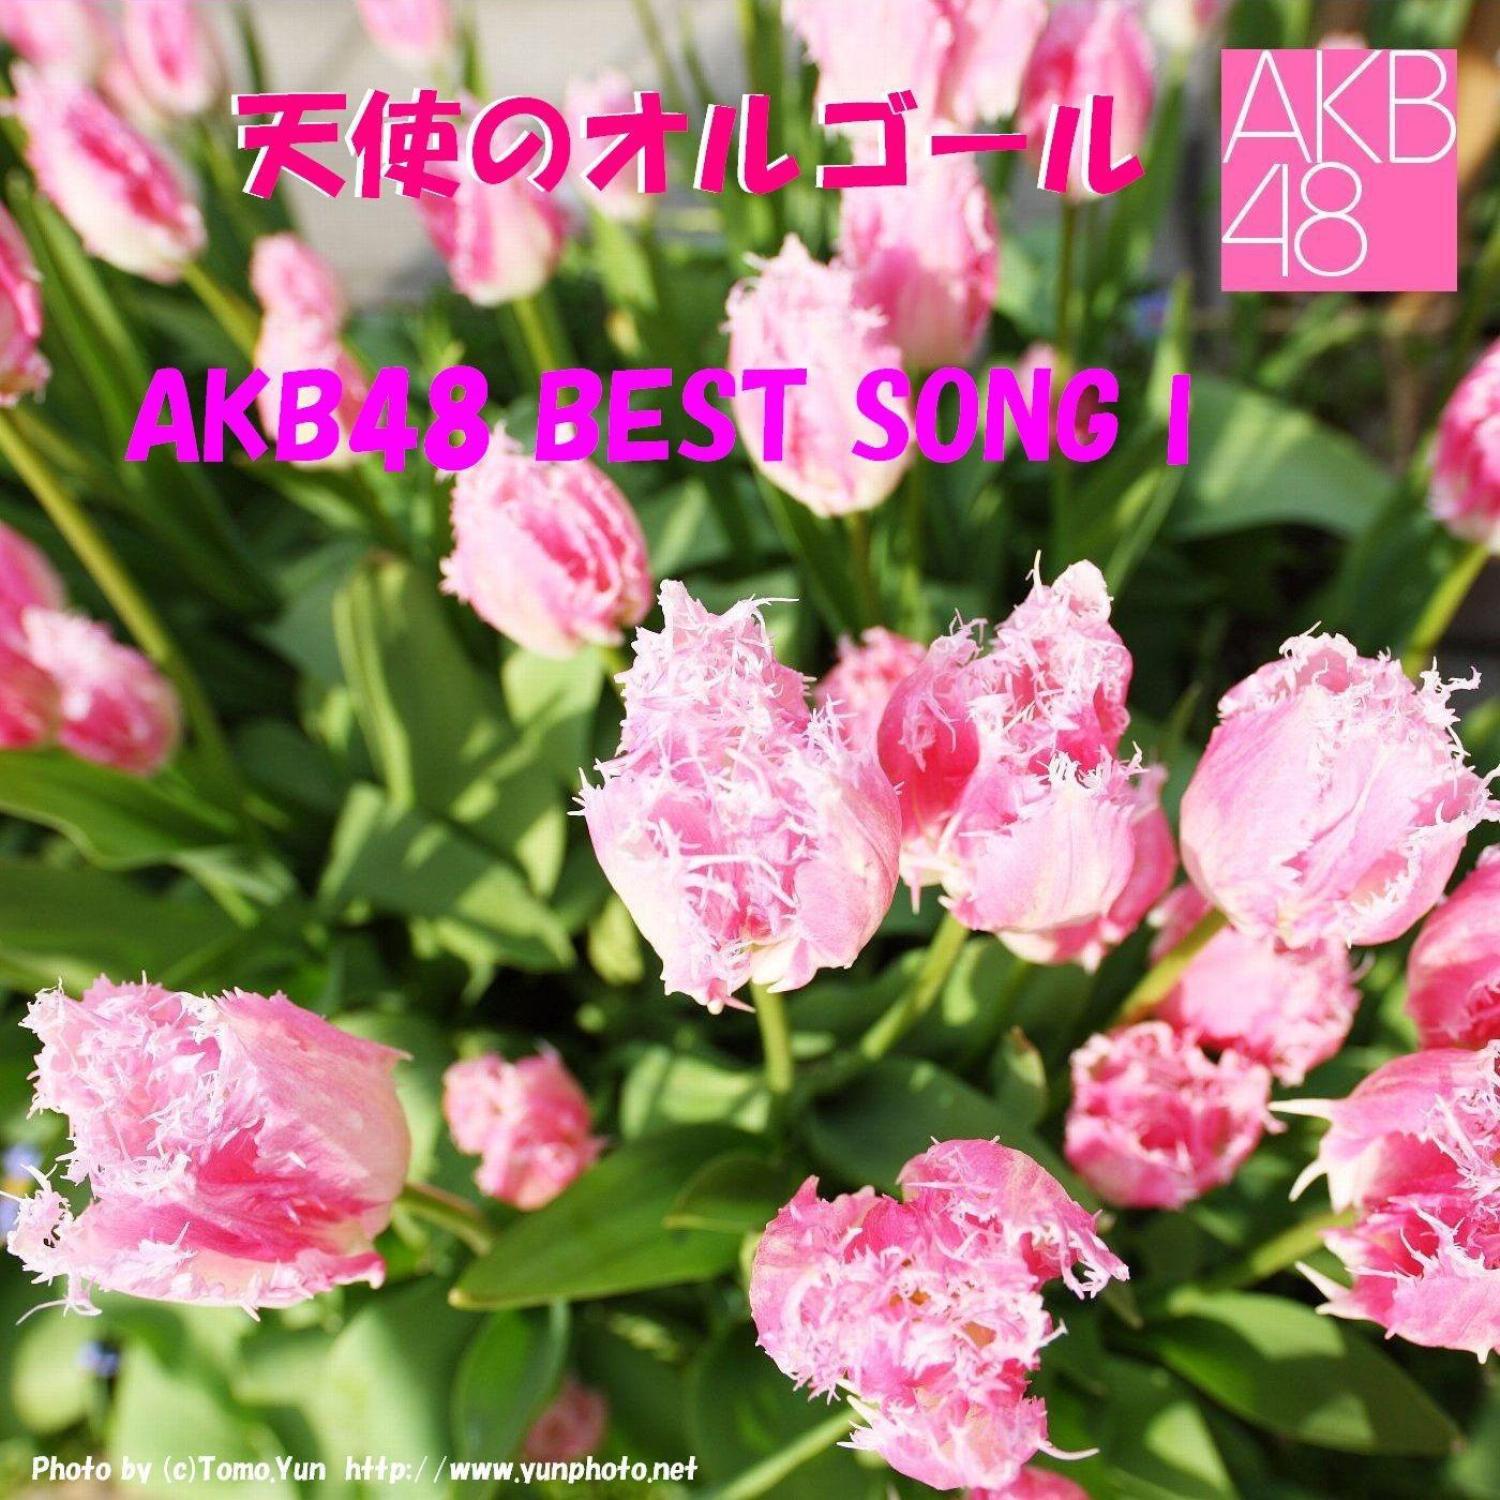 Bounce Back - Aitakatta [Originally Performed by AKB48]